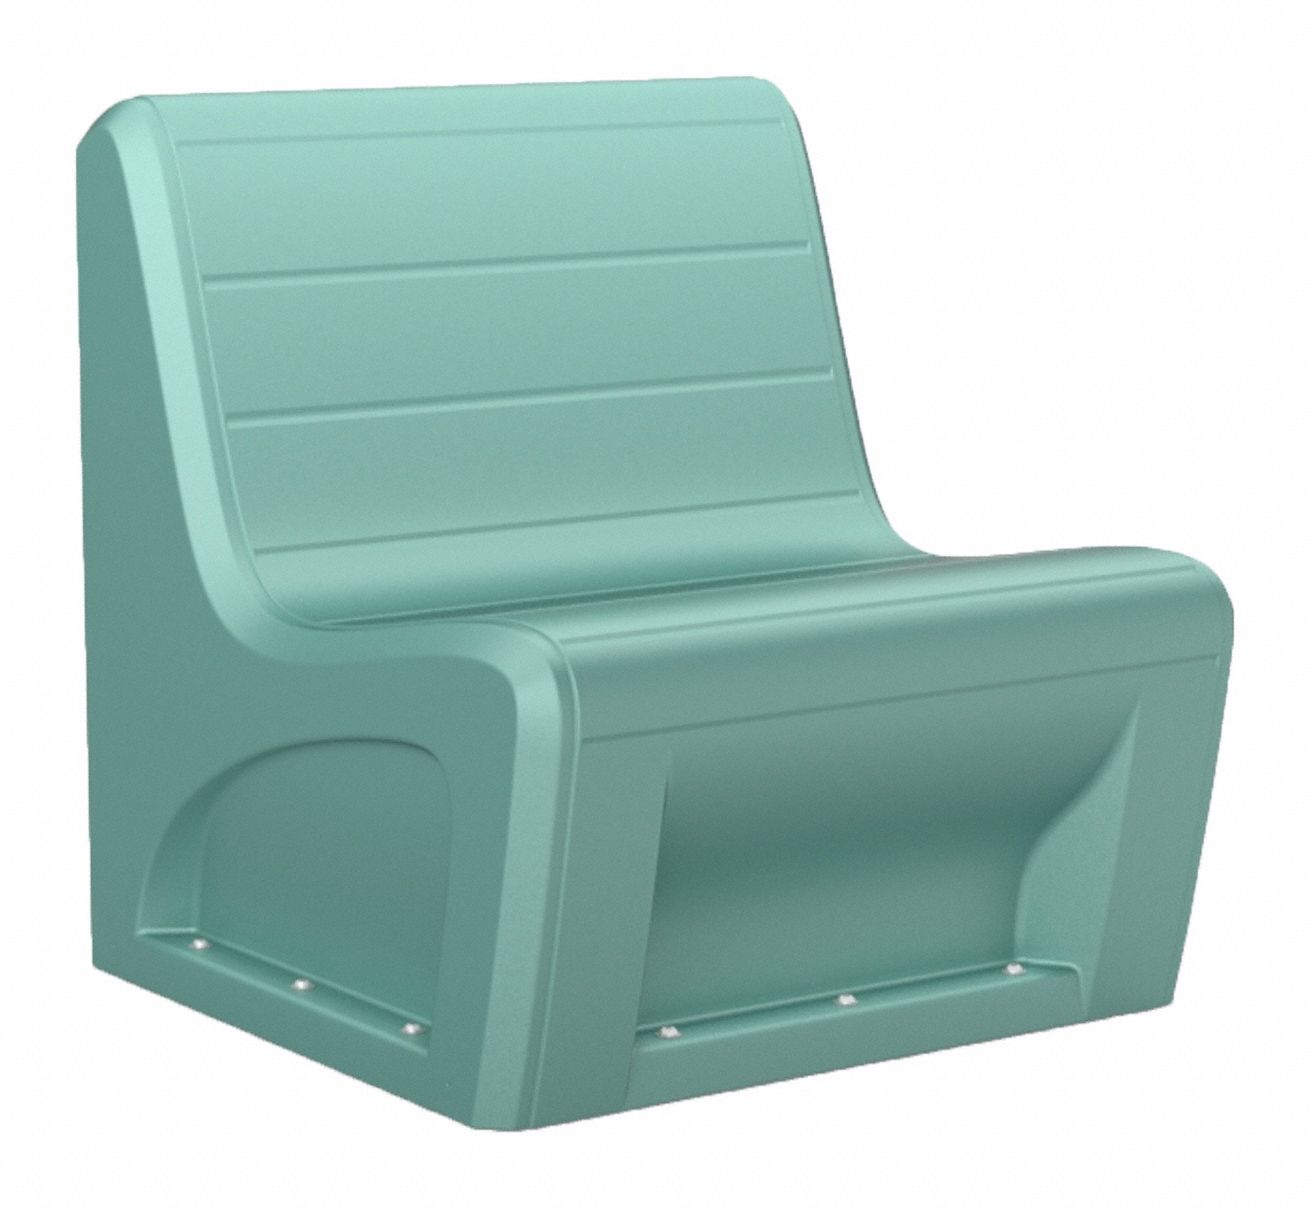 Sabre Sectional Chair Aqua: 30 1/2 in Wd, 32 in Lg, 33 in Ht, 500 lb Wt Capacity, Aqua